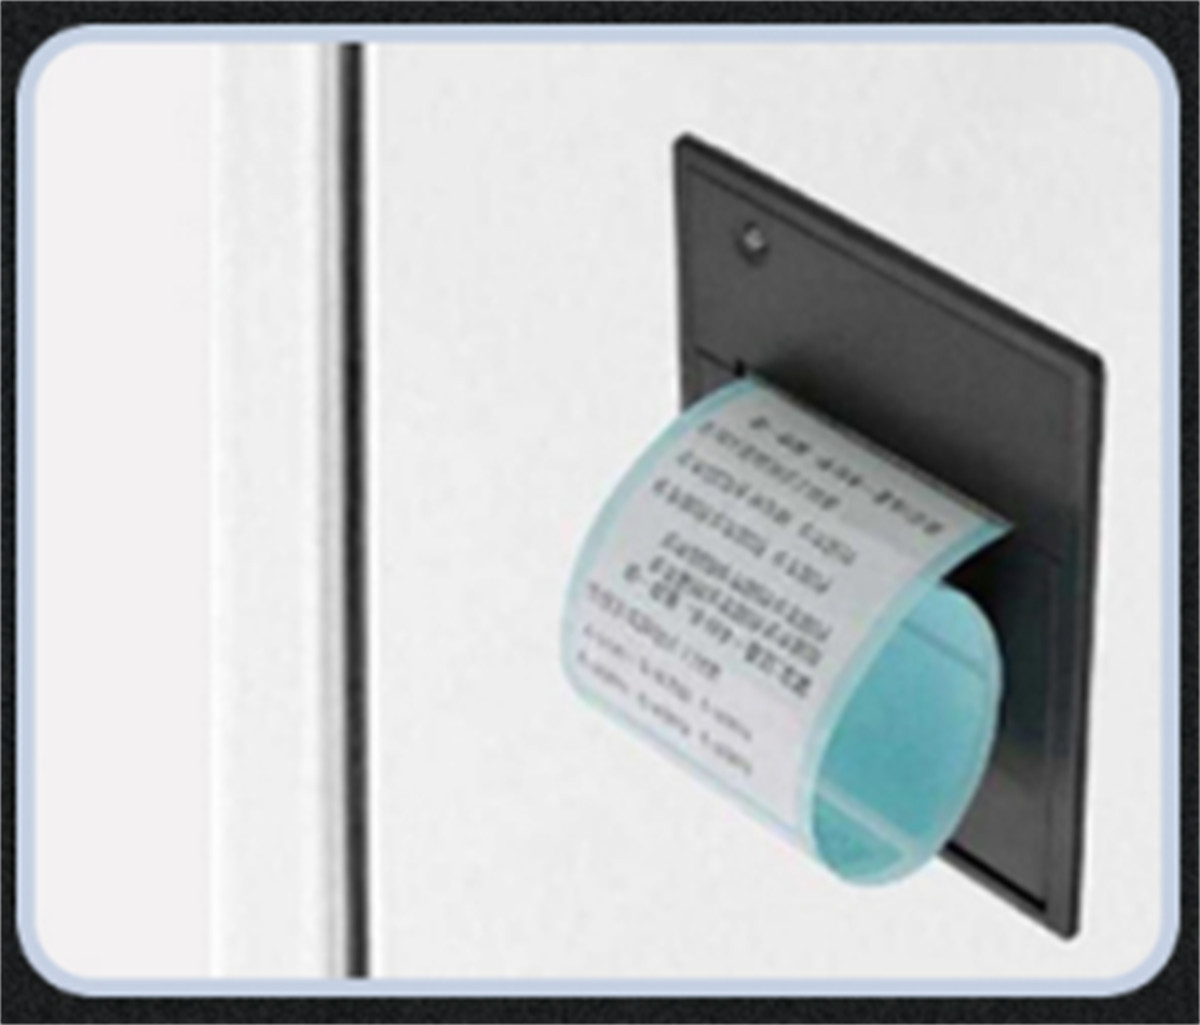 LCD 011 සමඟ FDA සහ Medical CE අනුමත Smart Handle